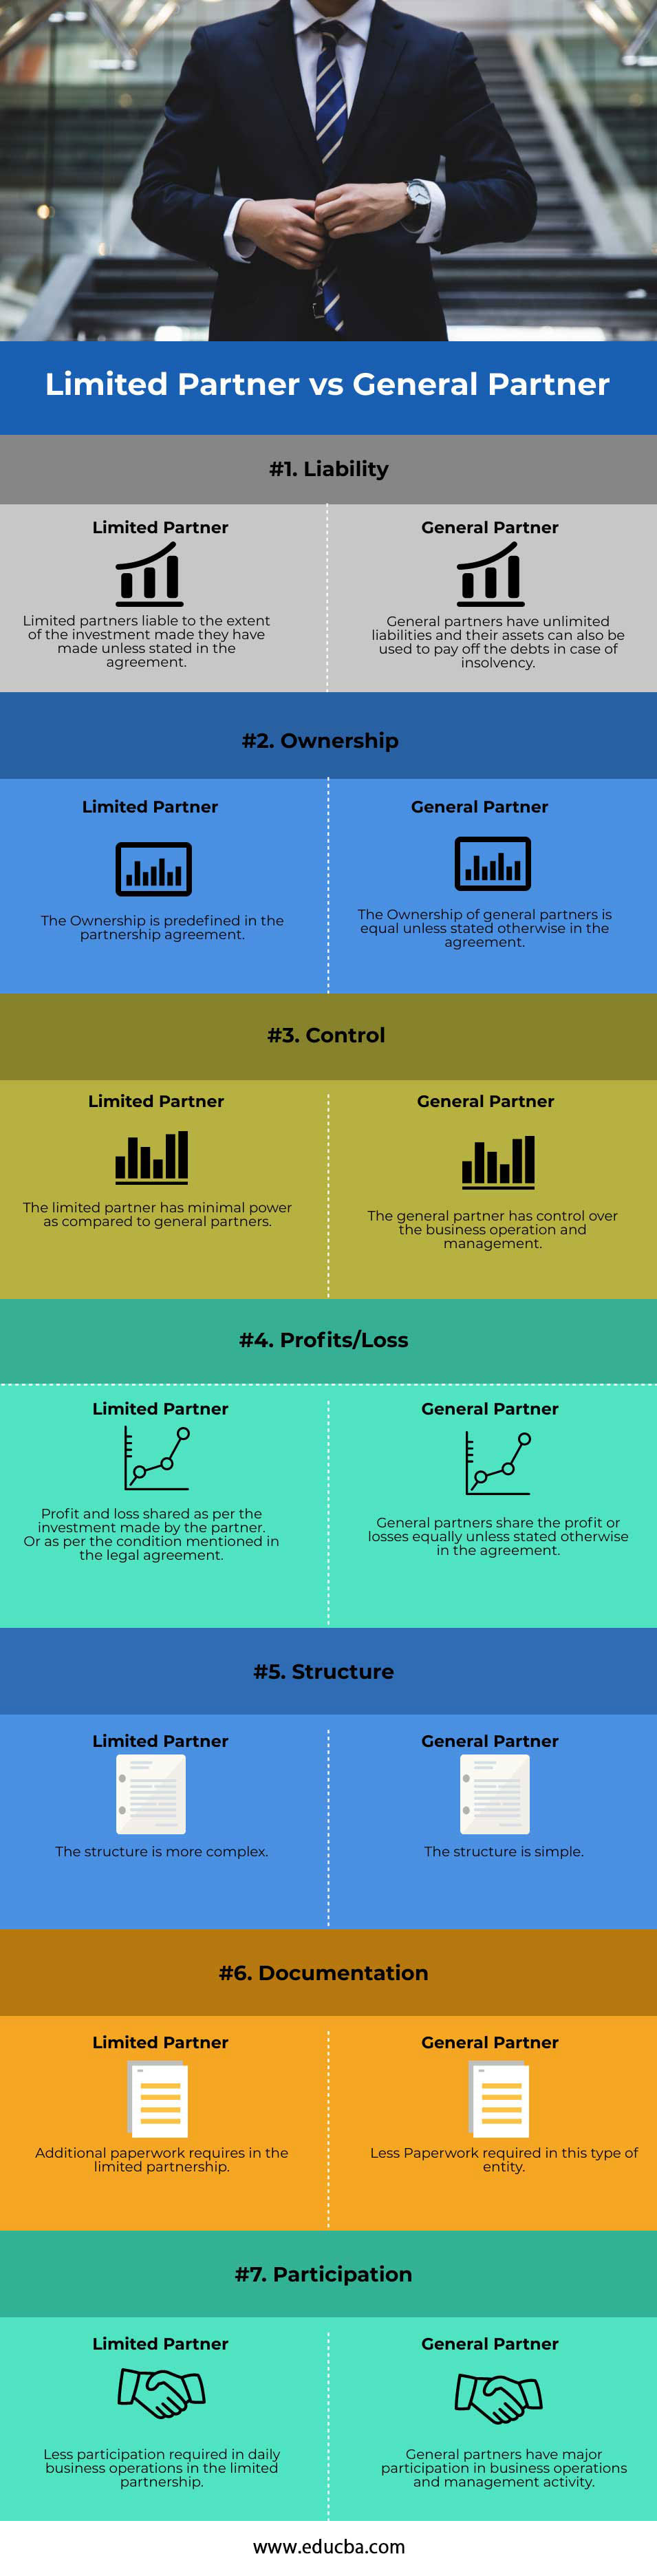 Limited-Partner-vs-General-Partner-info